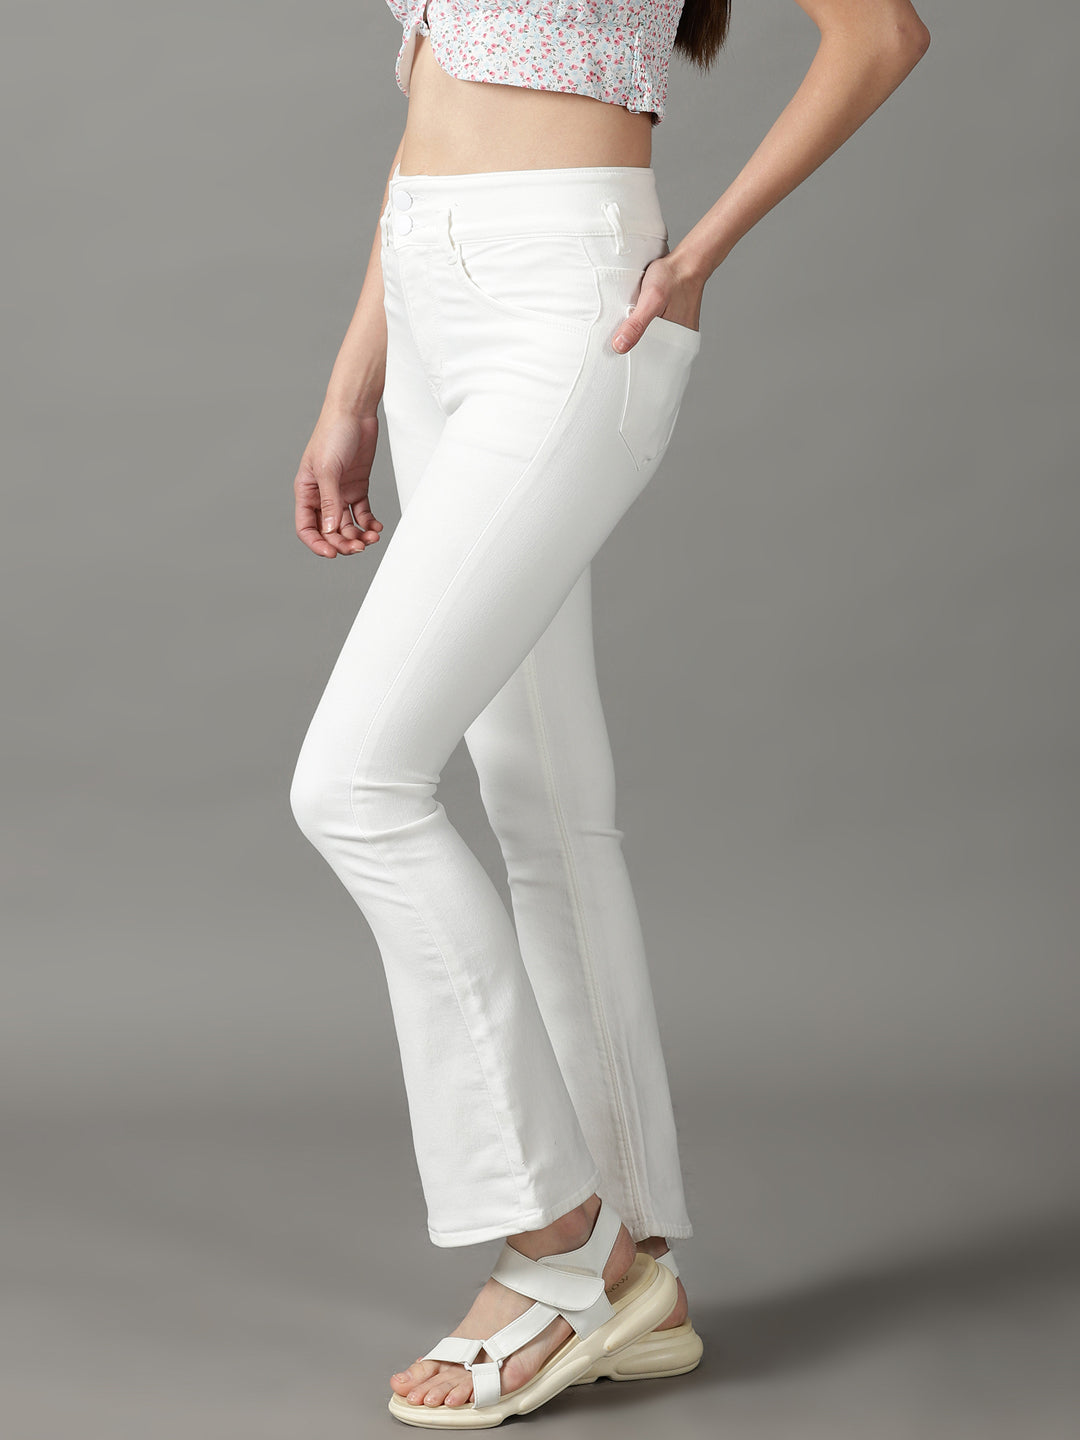 Women's White Solid Bootcut Denim Jeans